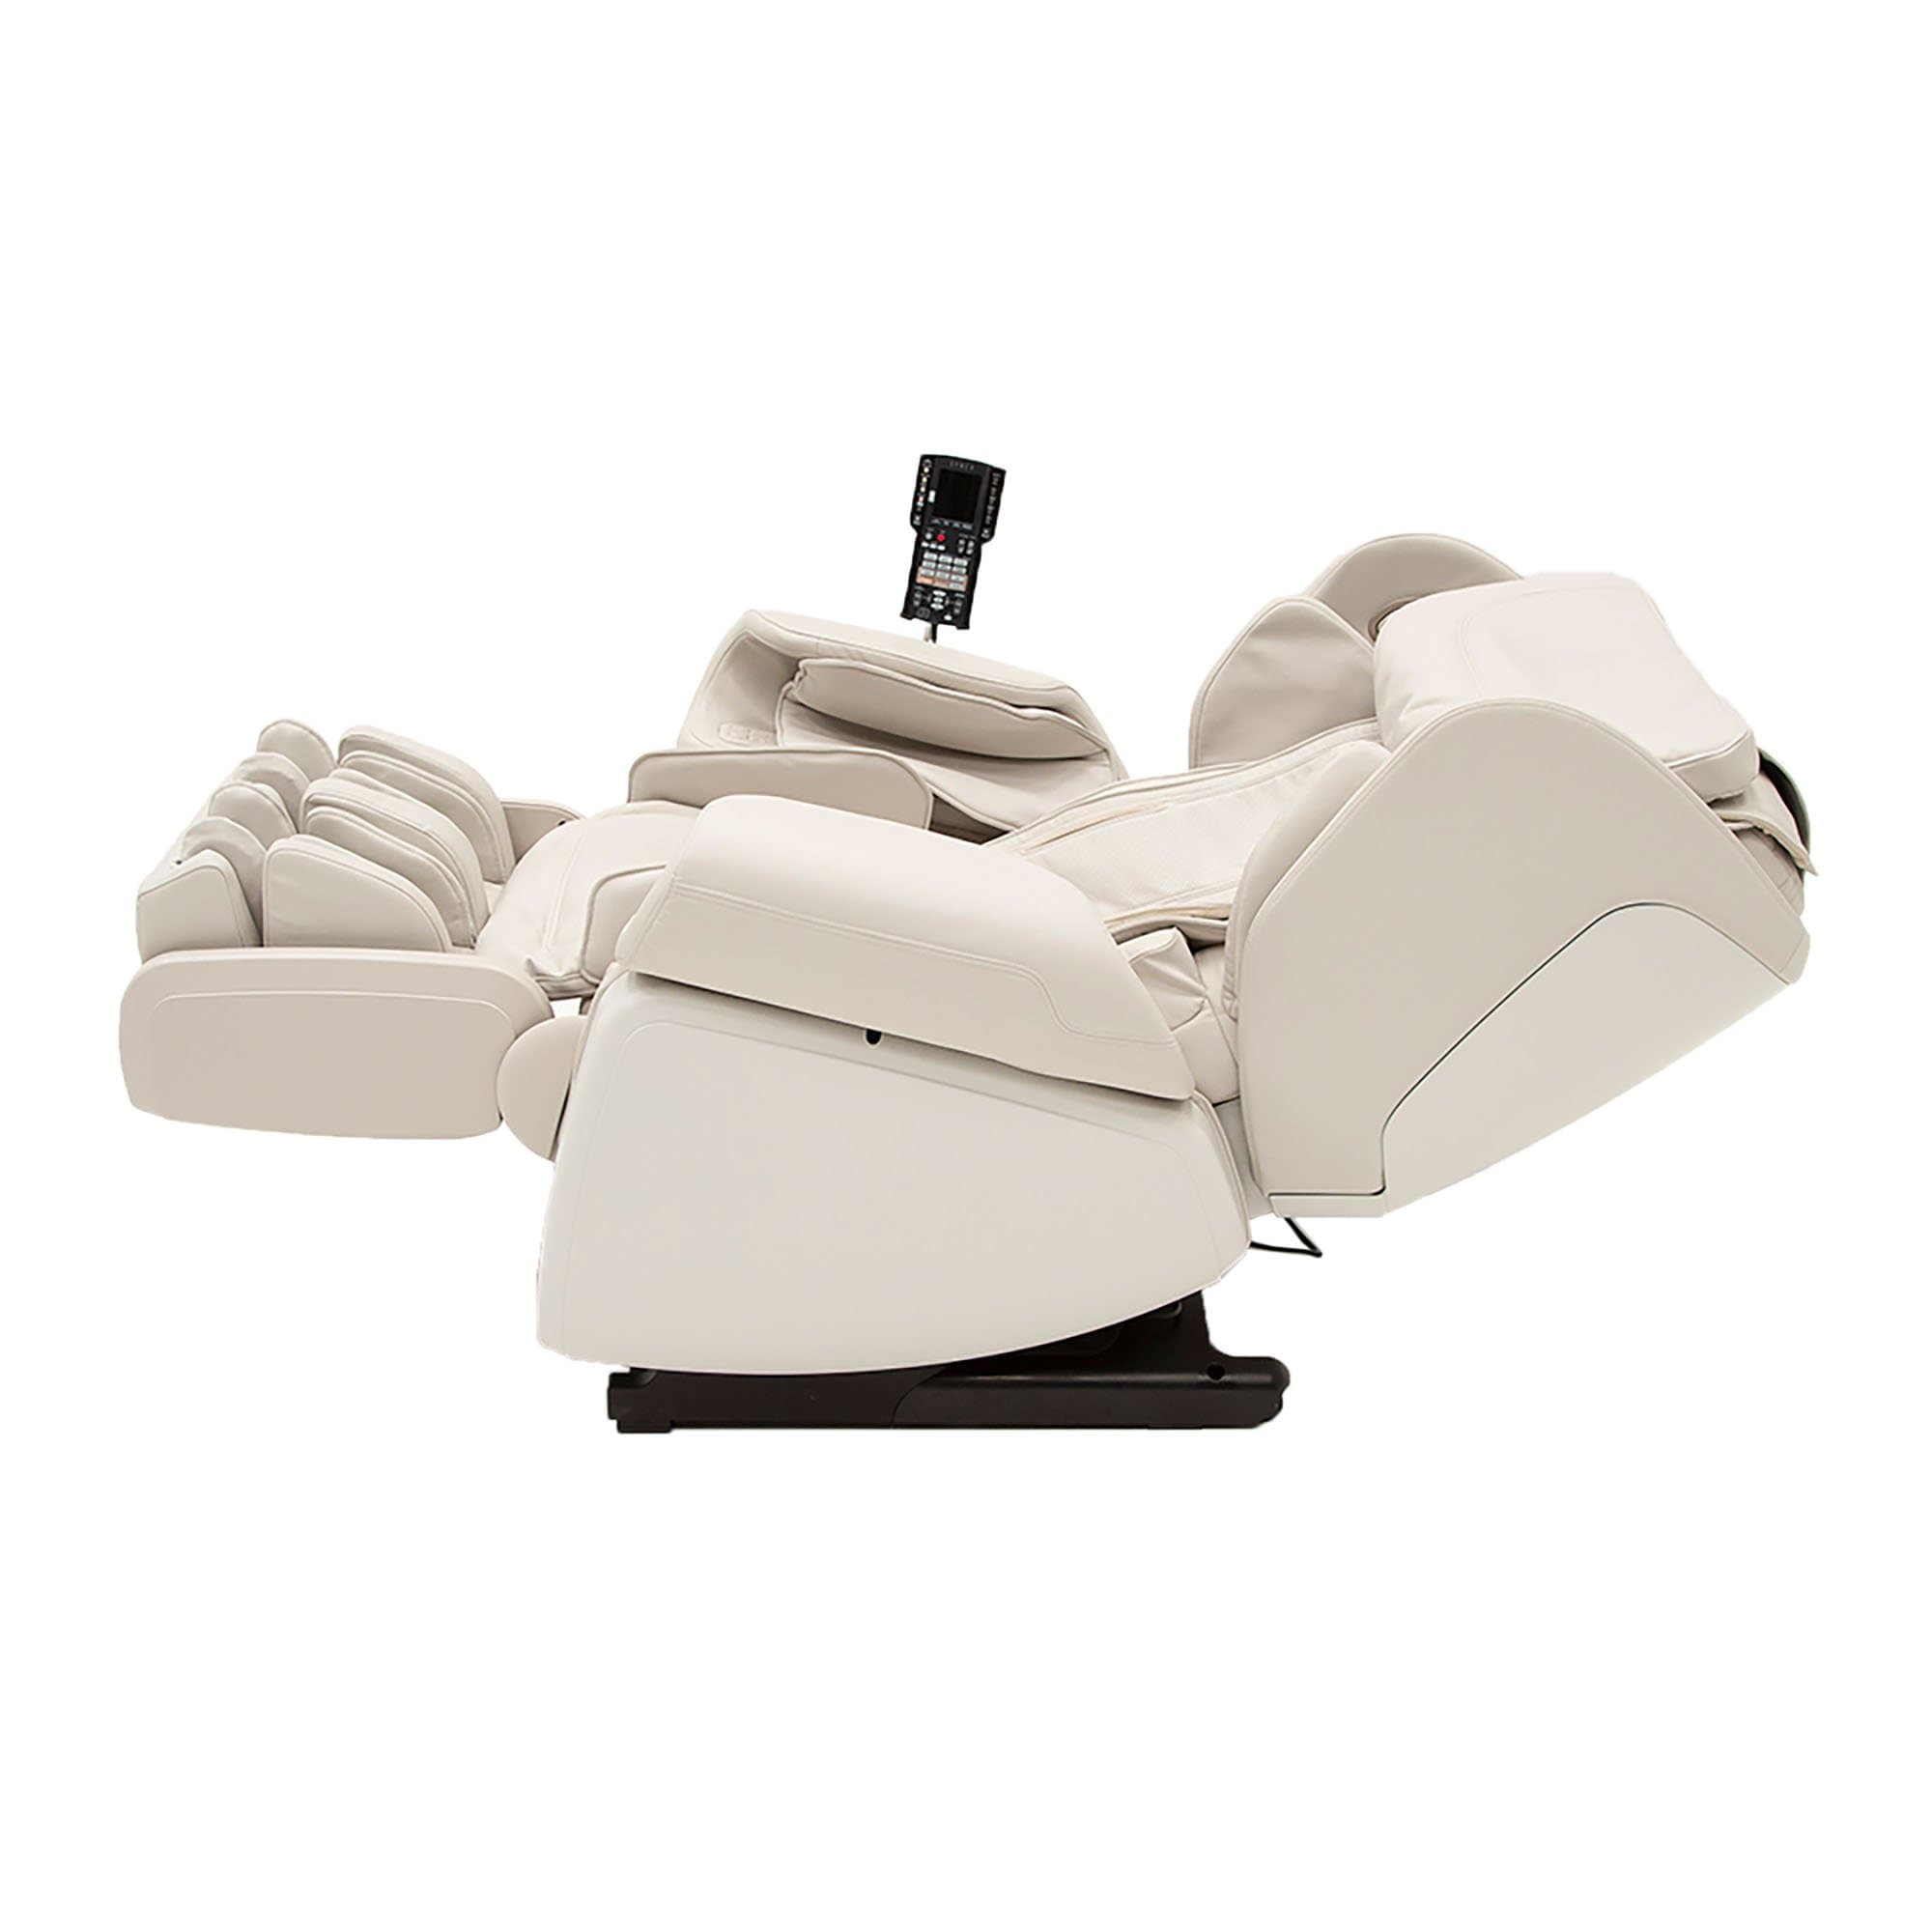 Synca Massage chair Synca Kagra 4D Premium Massage chair -White SMR0007-09NA